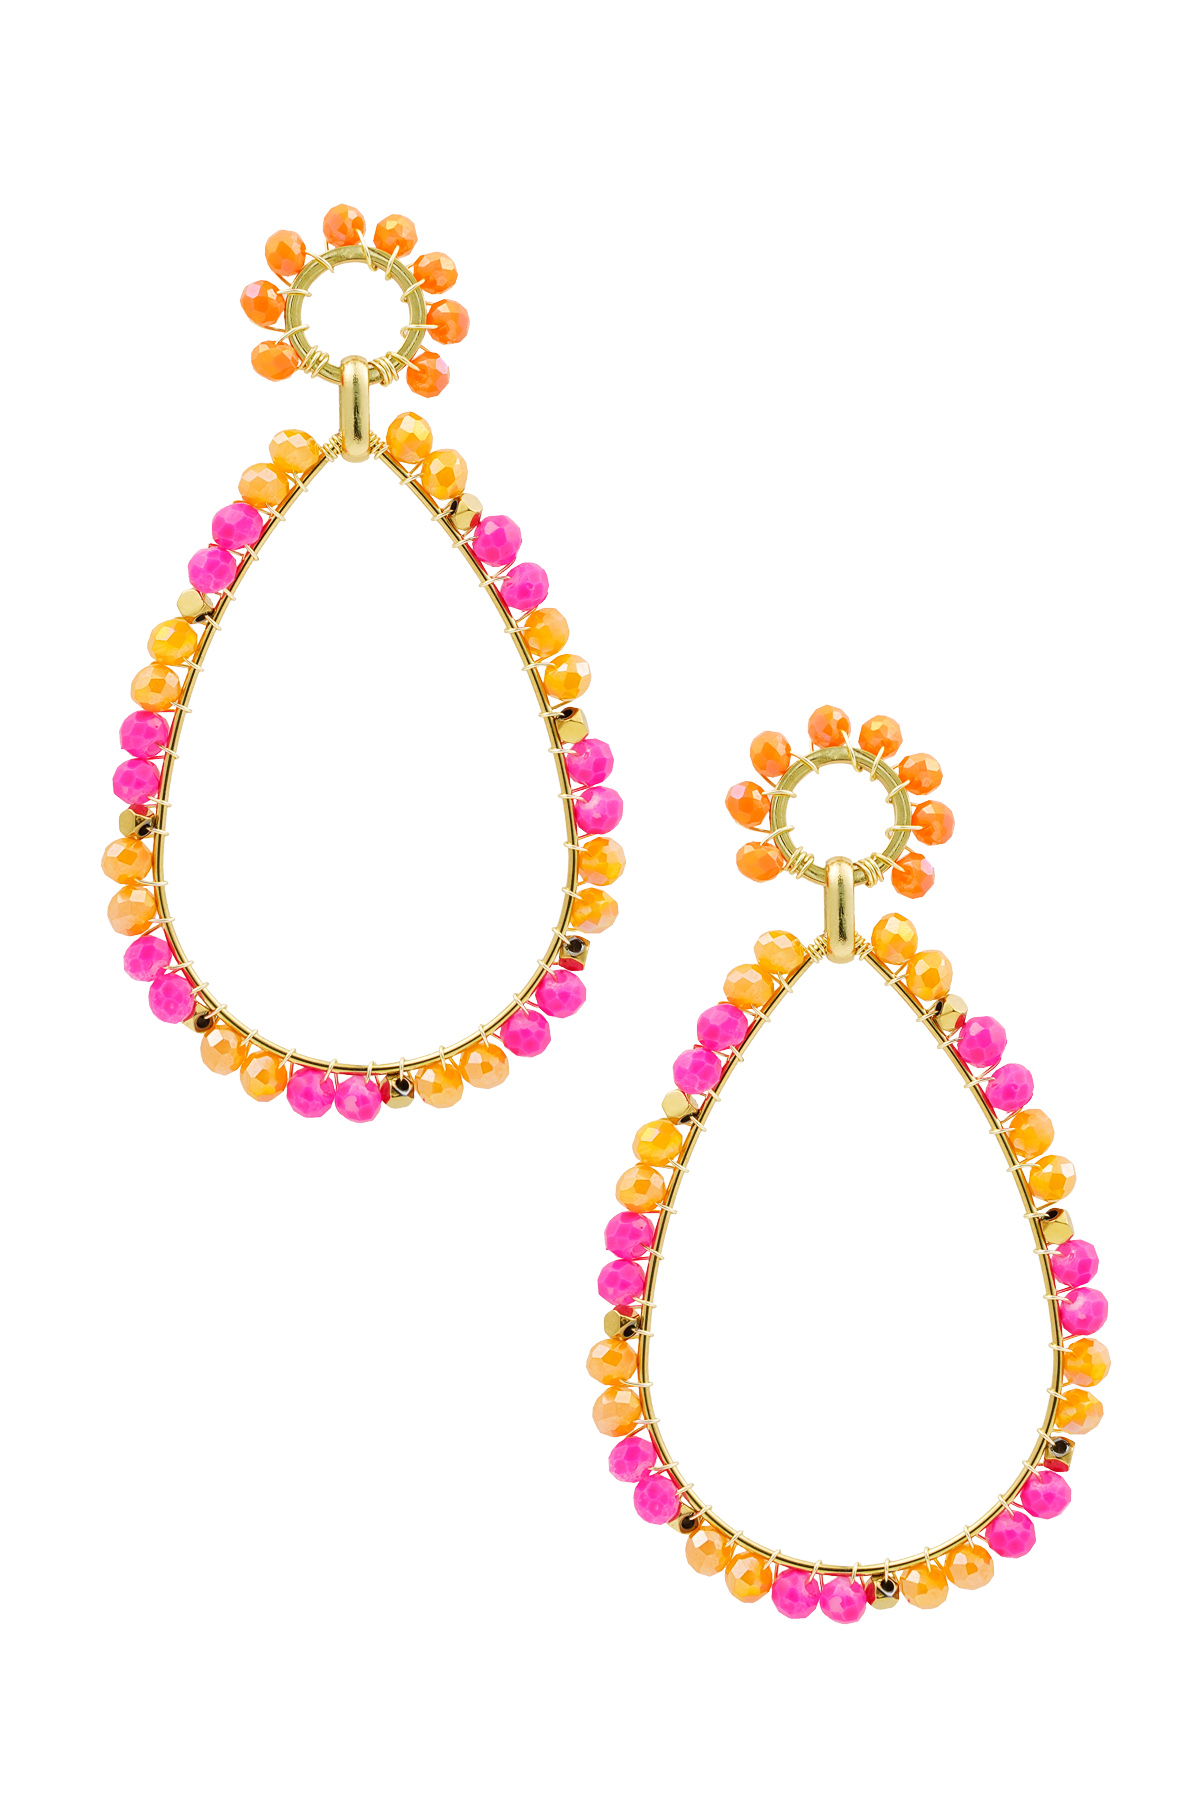 Earrings drop pendant with beads orange - pink